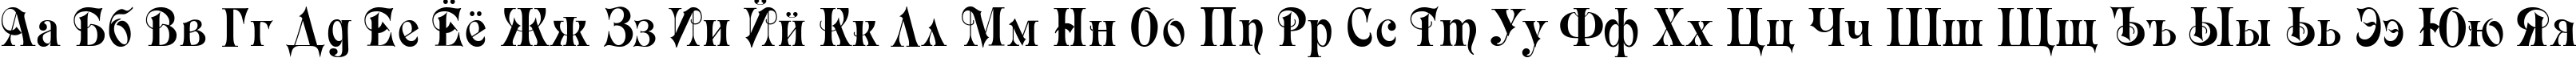 Пример написания русского алфавита шрифтом Rubius